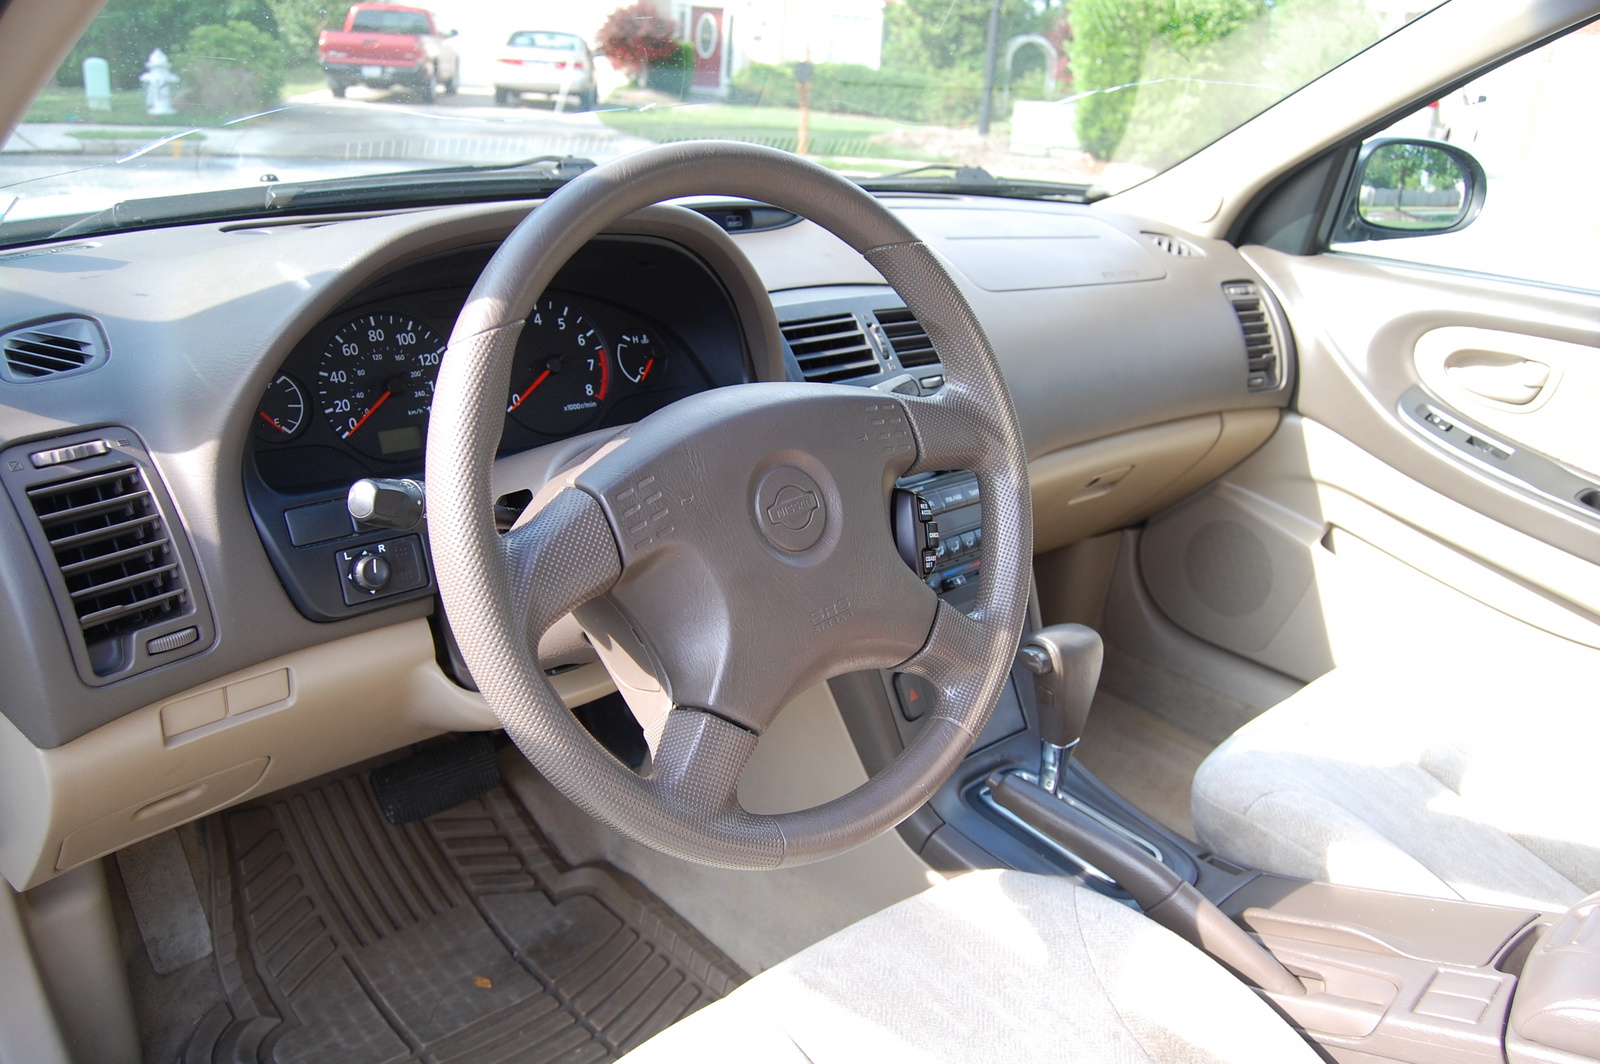 2000 Nissan maxima gle interior